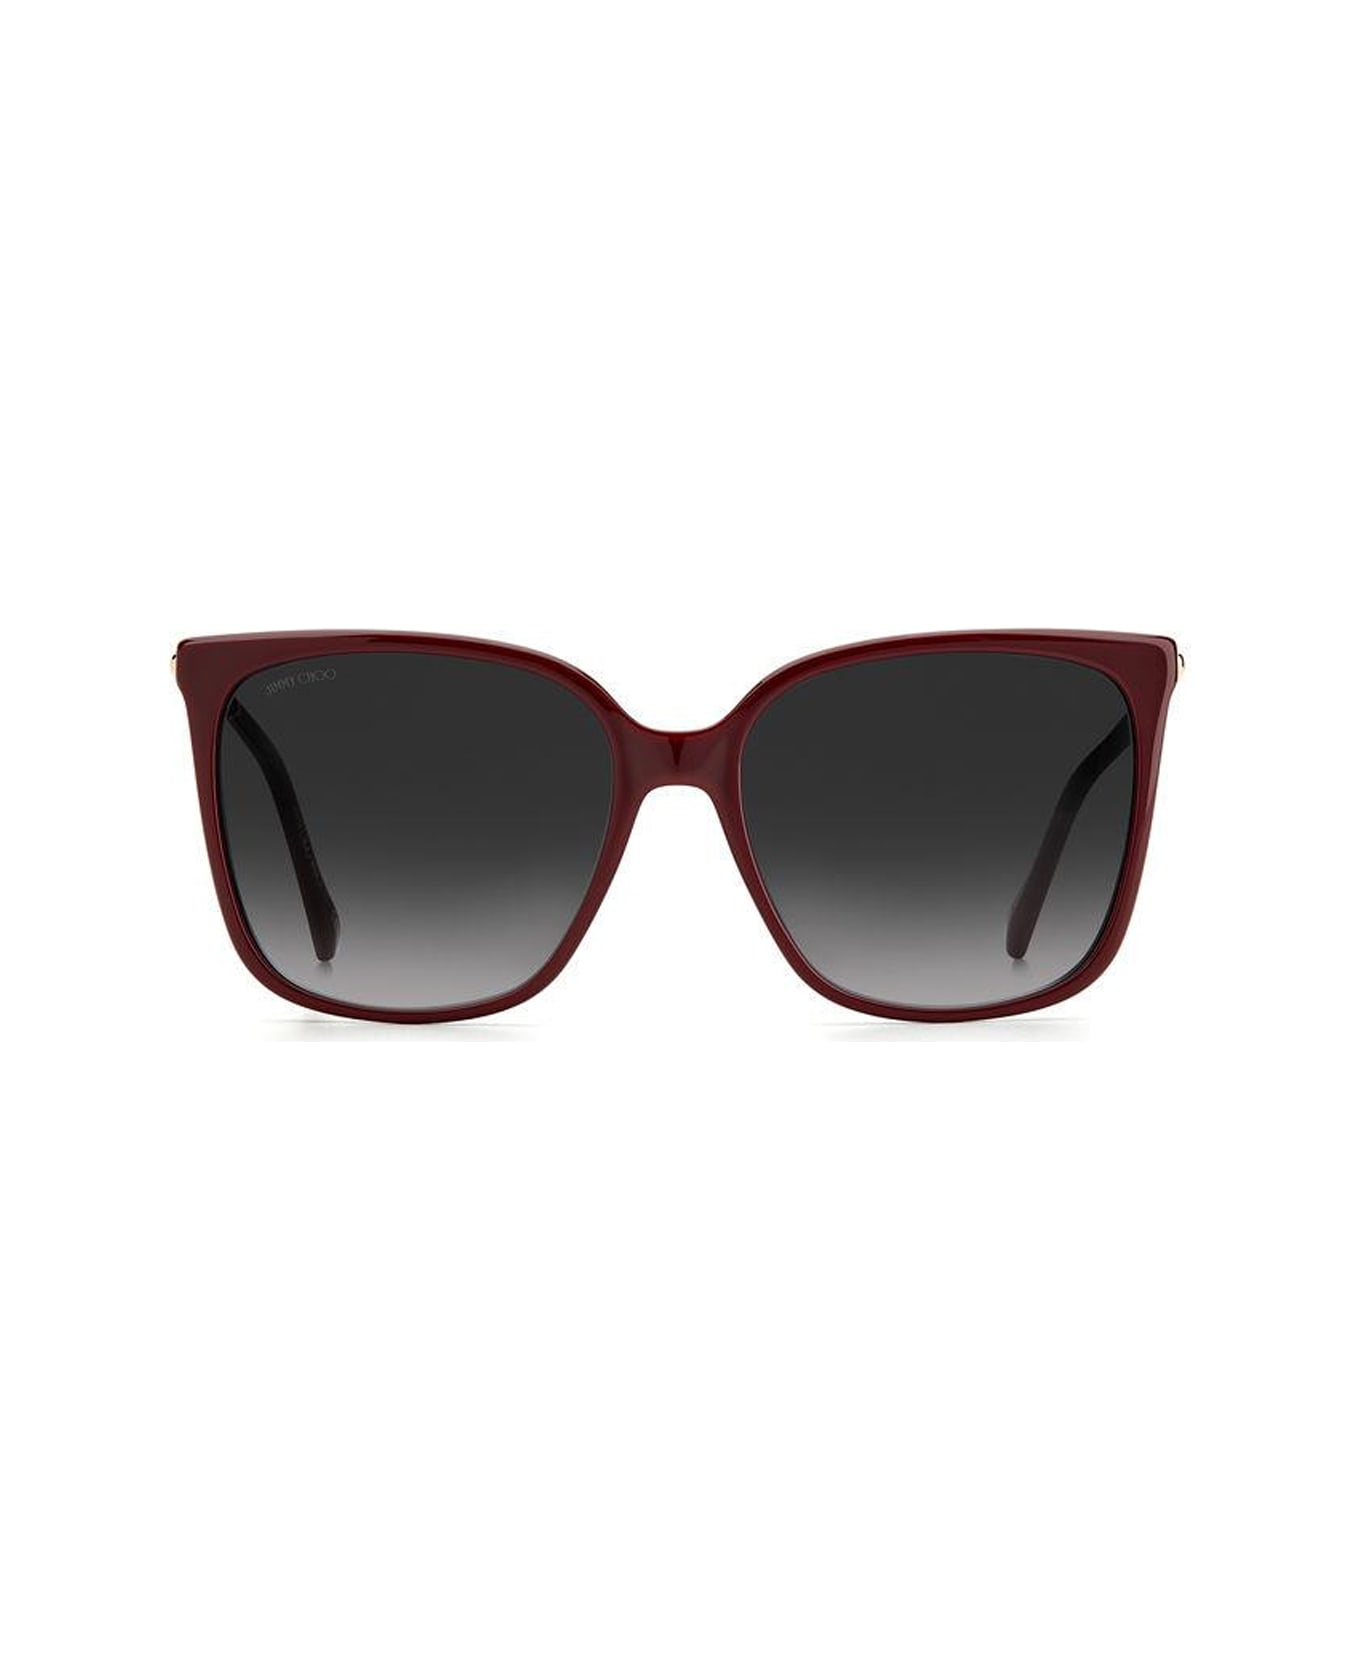 Jimmy Choo Eyewear Scilla/s Sunglasses - Rosso サングラス